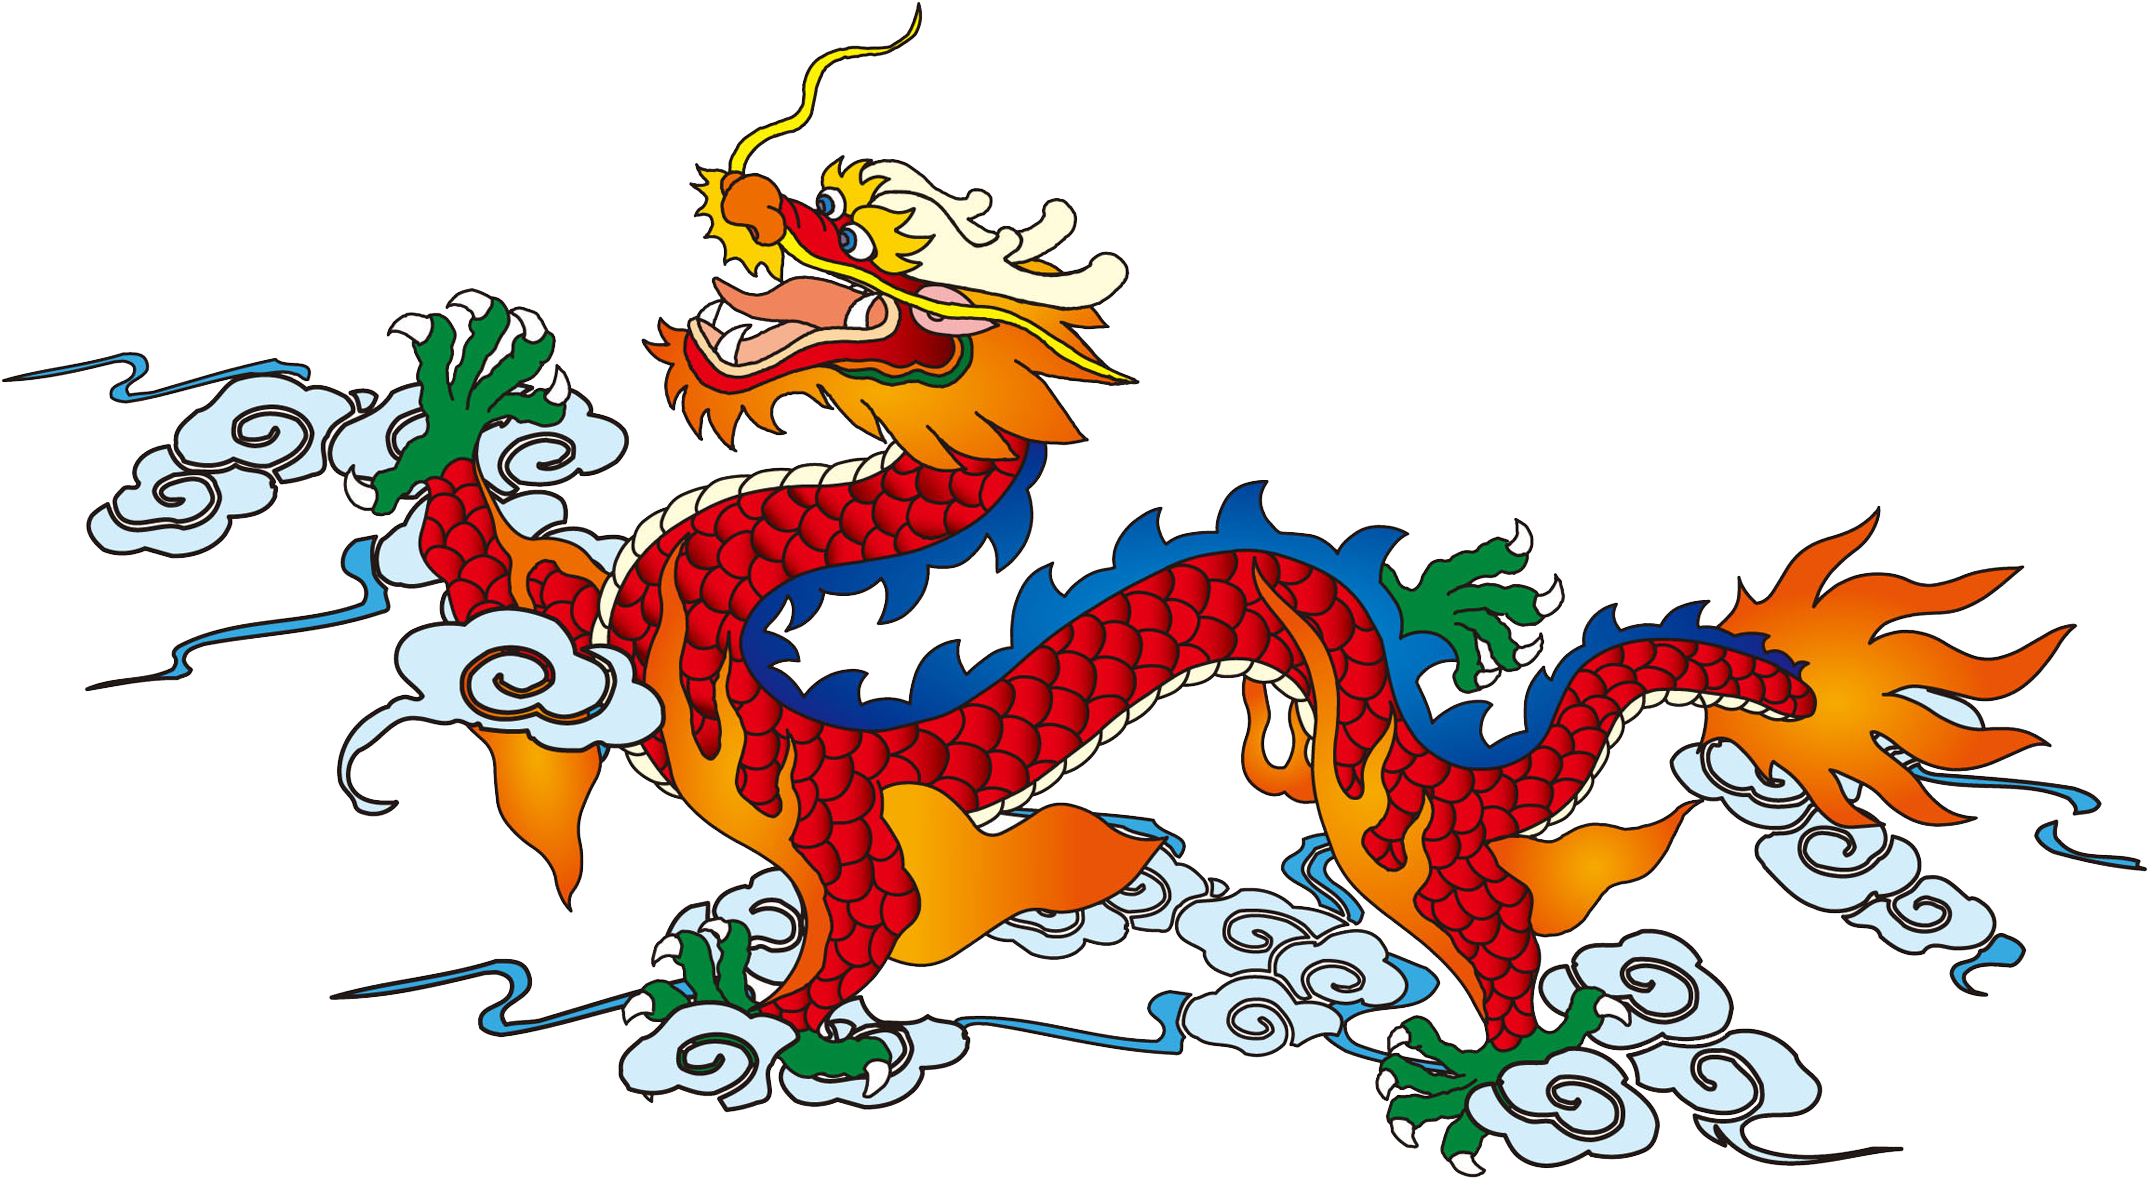 Дракончик символ года на прозрачном фоне. Чжулун дракон. Чжунлун китайский дракон. Китайский дракон символ Китая. Китайский дракон вид сбоку.